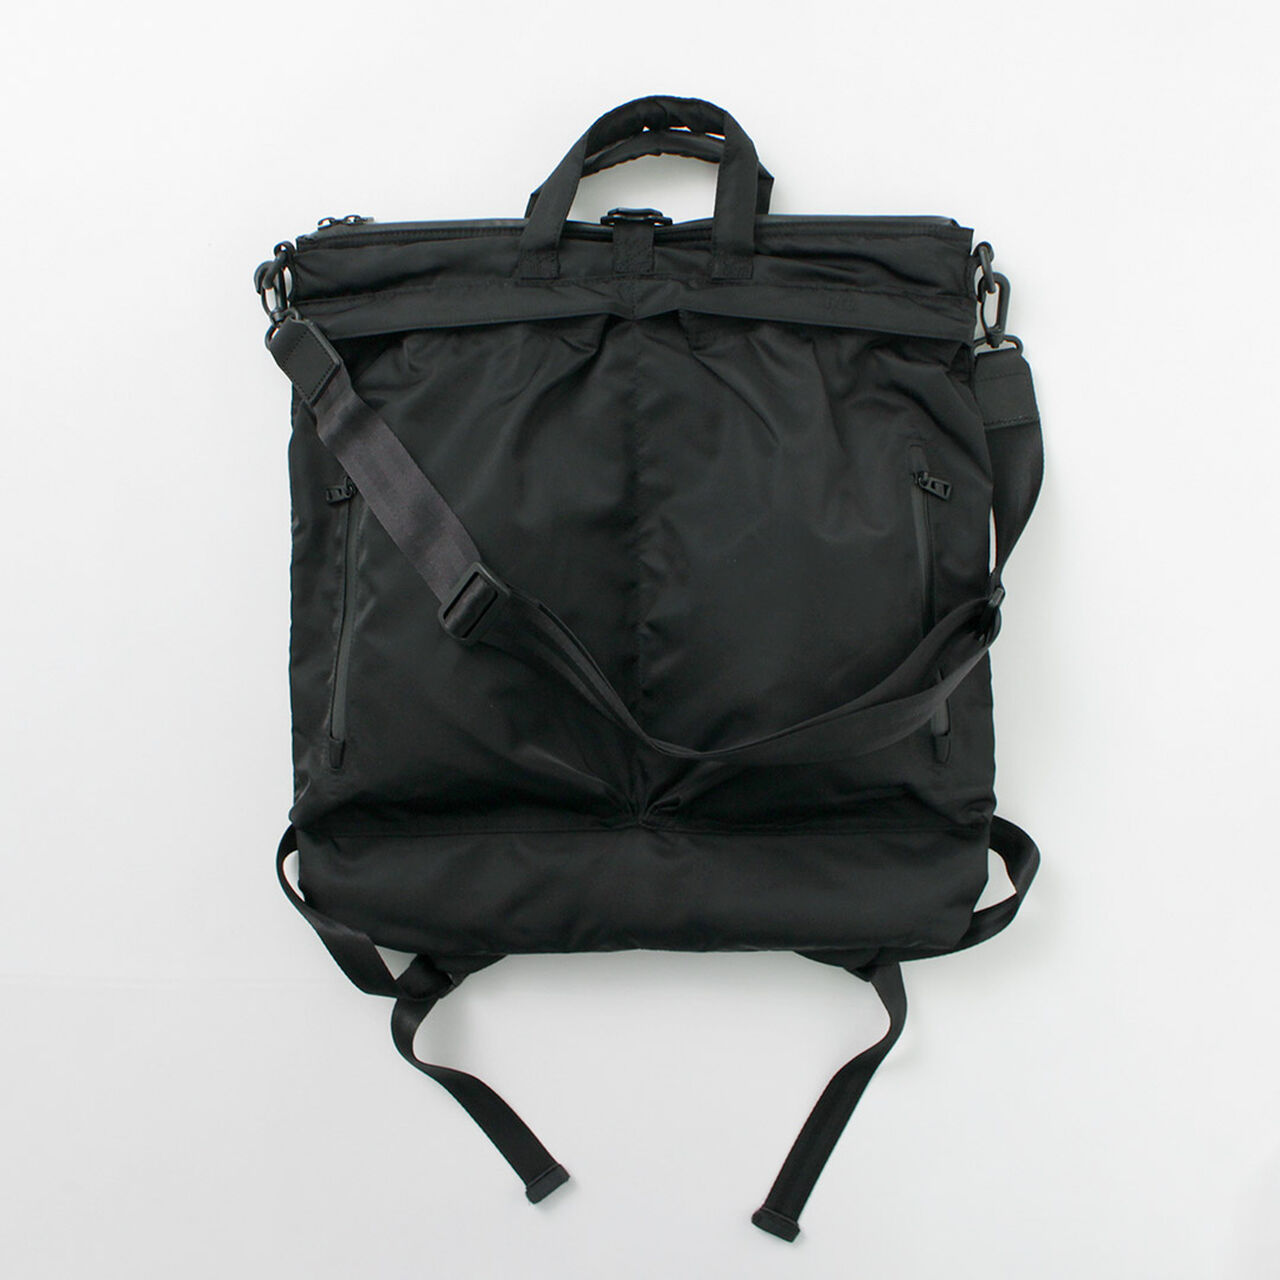 Recycle twill 3-way helmet bag,Black, large image number 0